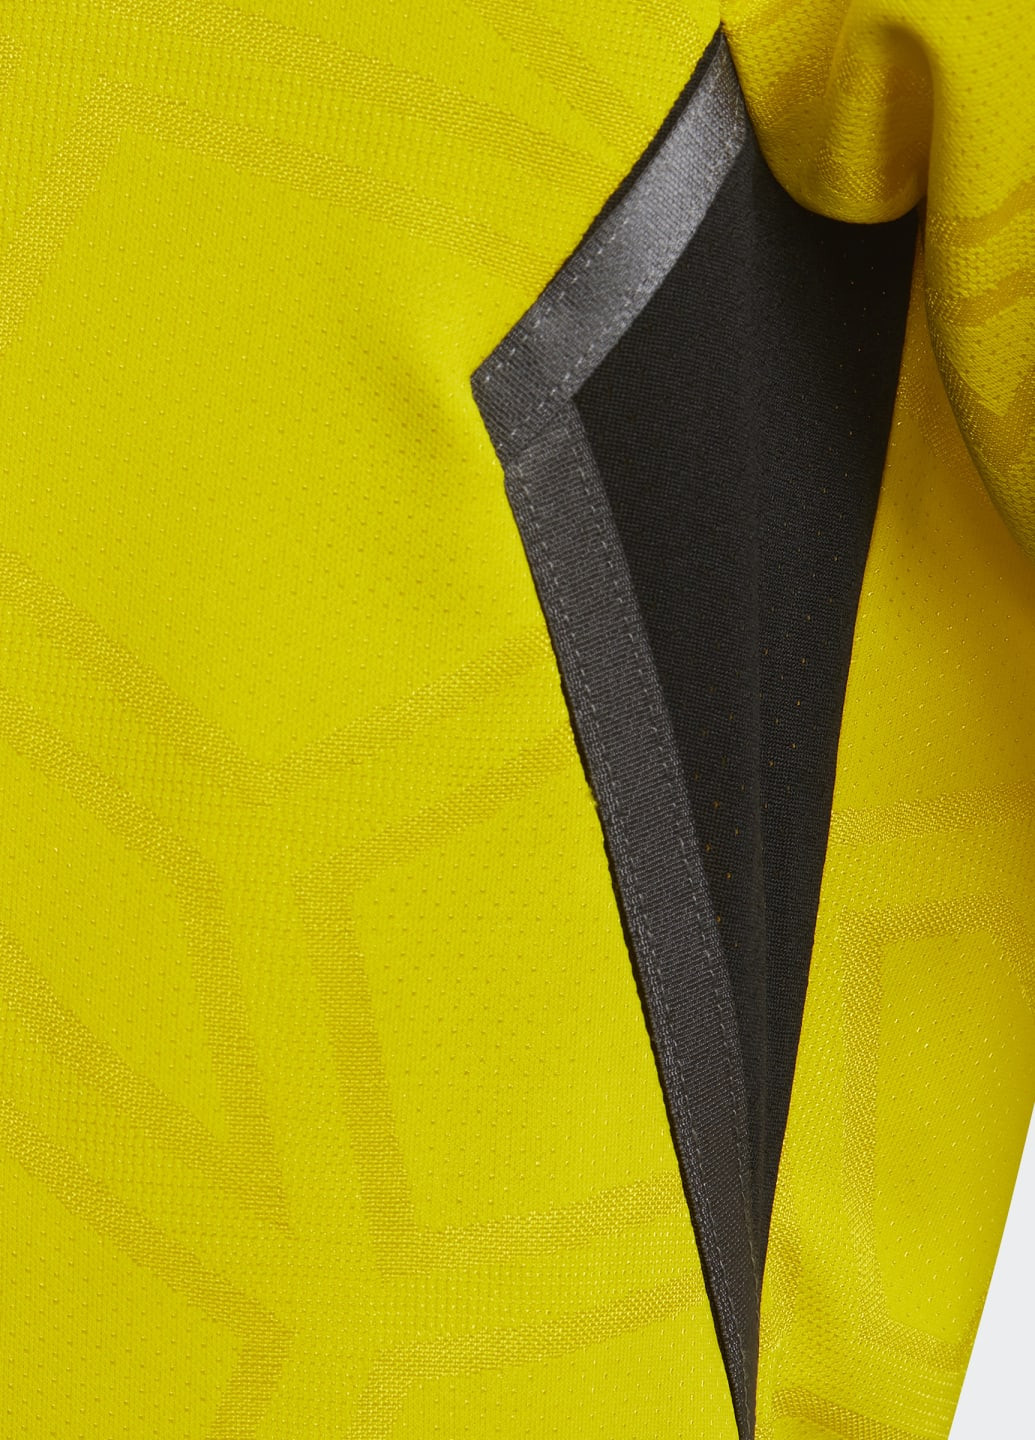 Жовта демісезонна футболка condivo 22 match day adidas